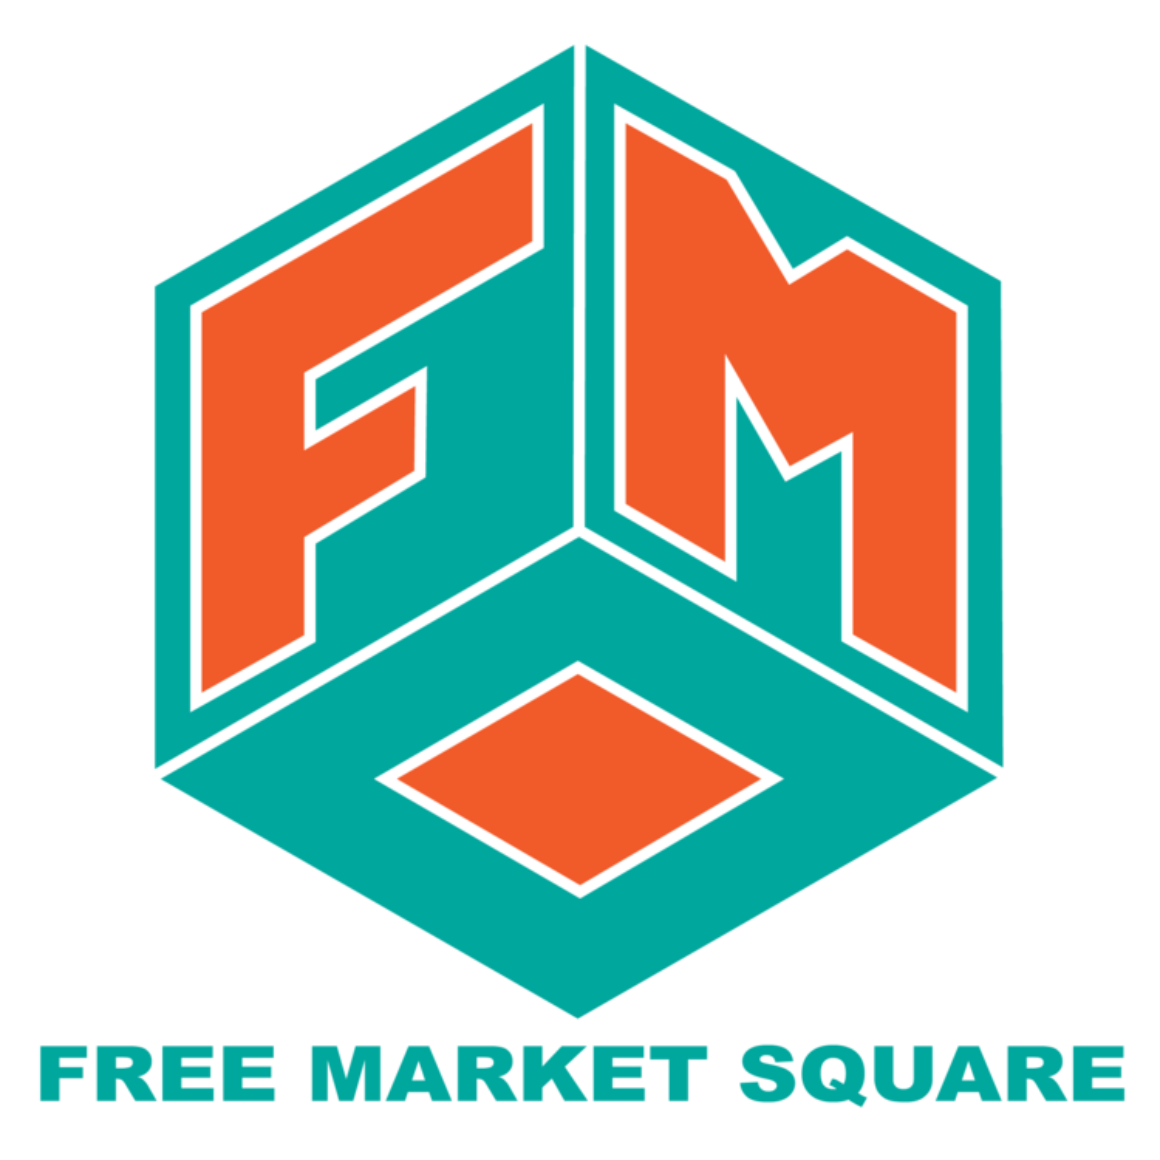 Vendor Opportunity: Free Market Square